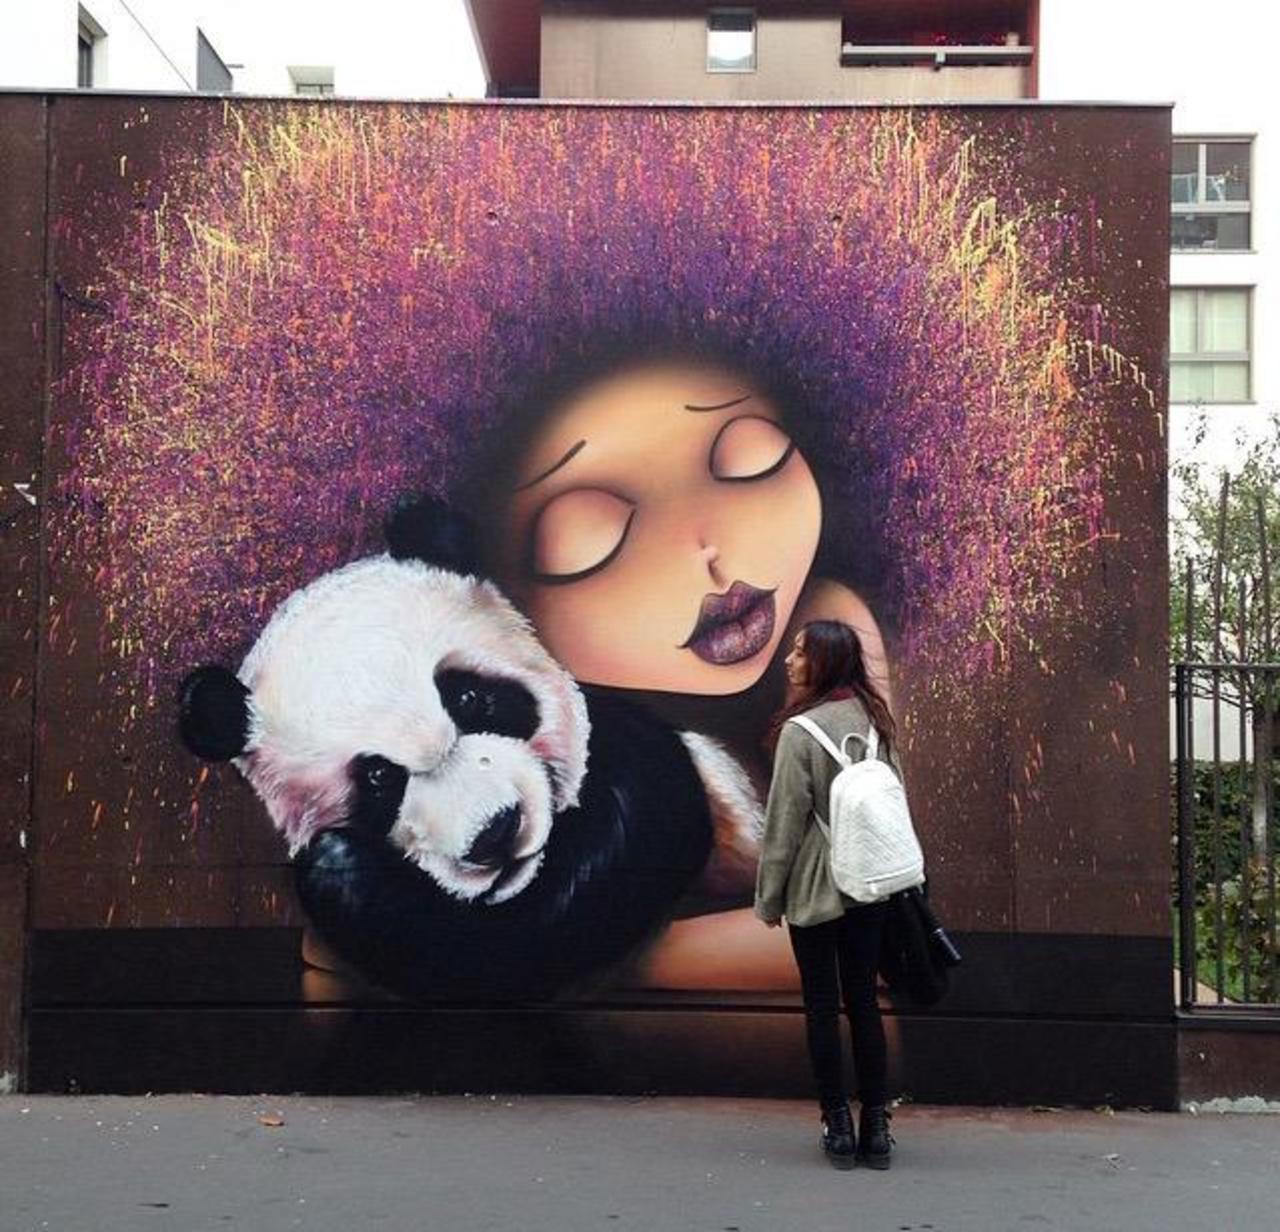 Street Art by VinieGraffiti in Paris 

#art #graffiti #mural #streetart http://t.co/SkOU0mGRZE